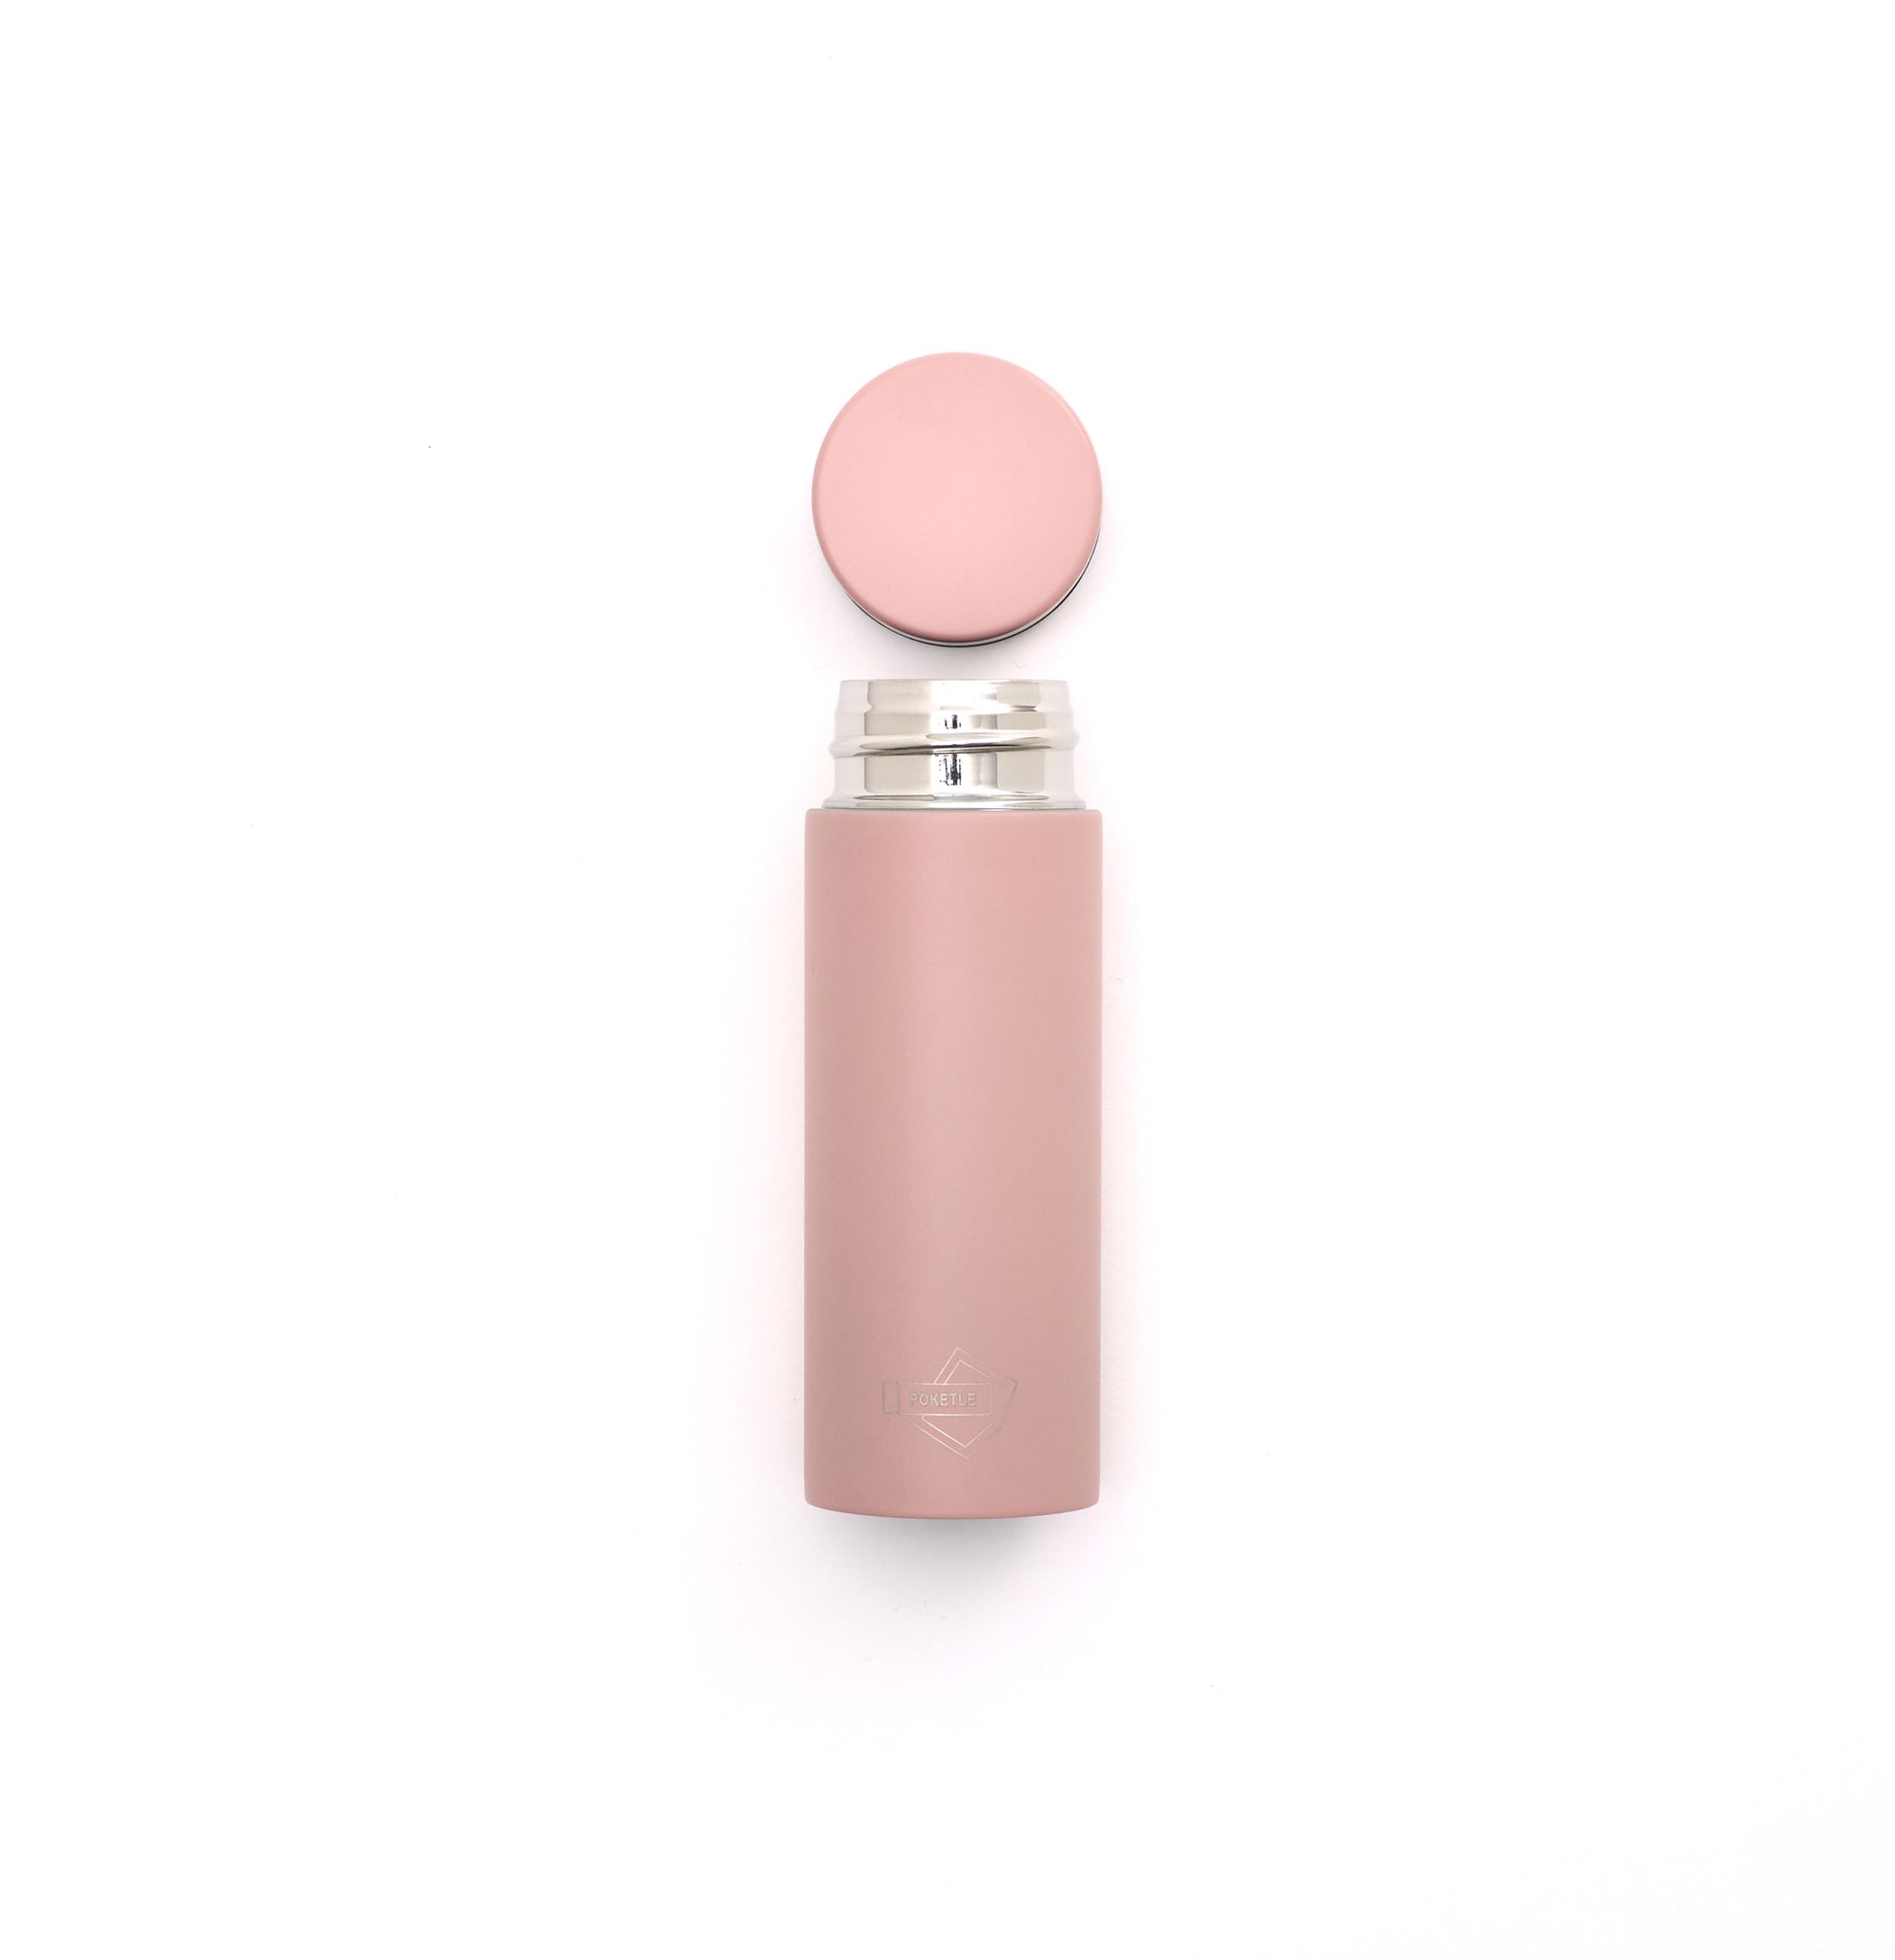 Poketle - Mini-termos/Termokopp 120ml - Peach Pink - COLORPOP